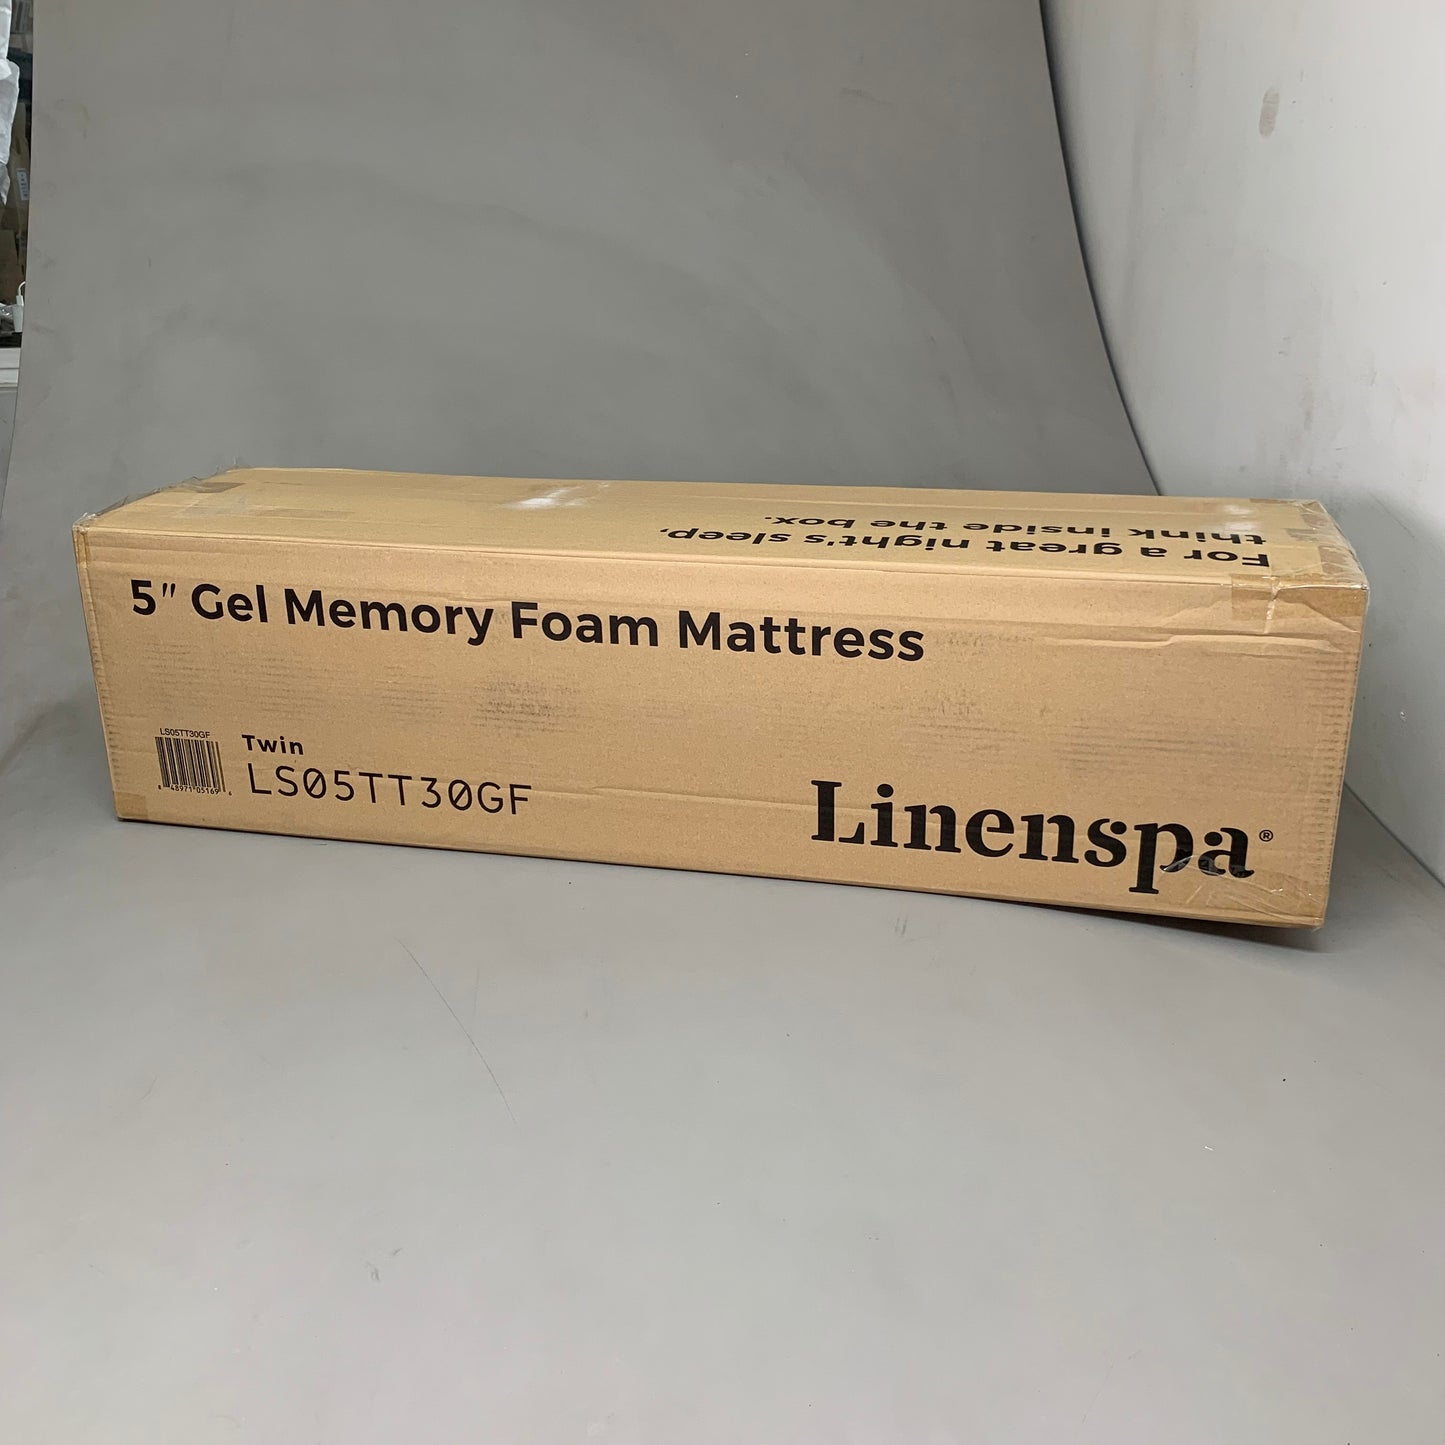 LINENSPA 5" Gel Memory Foam Mattress Medium Firm Twin White LS05TT30GF New